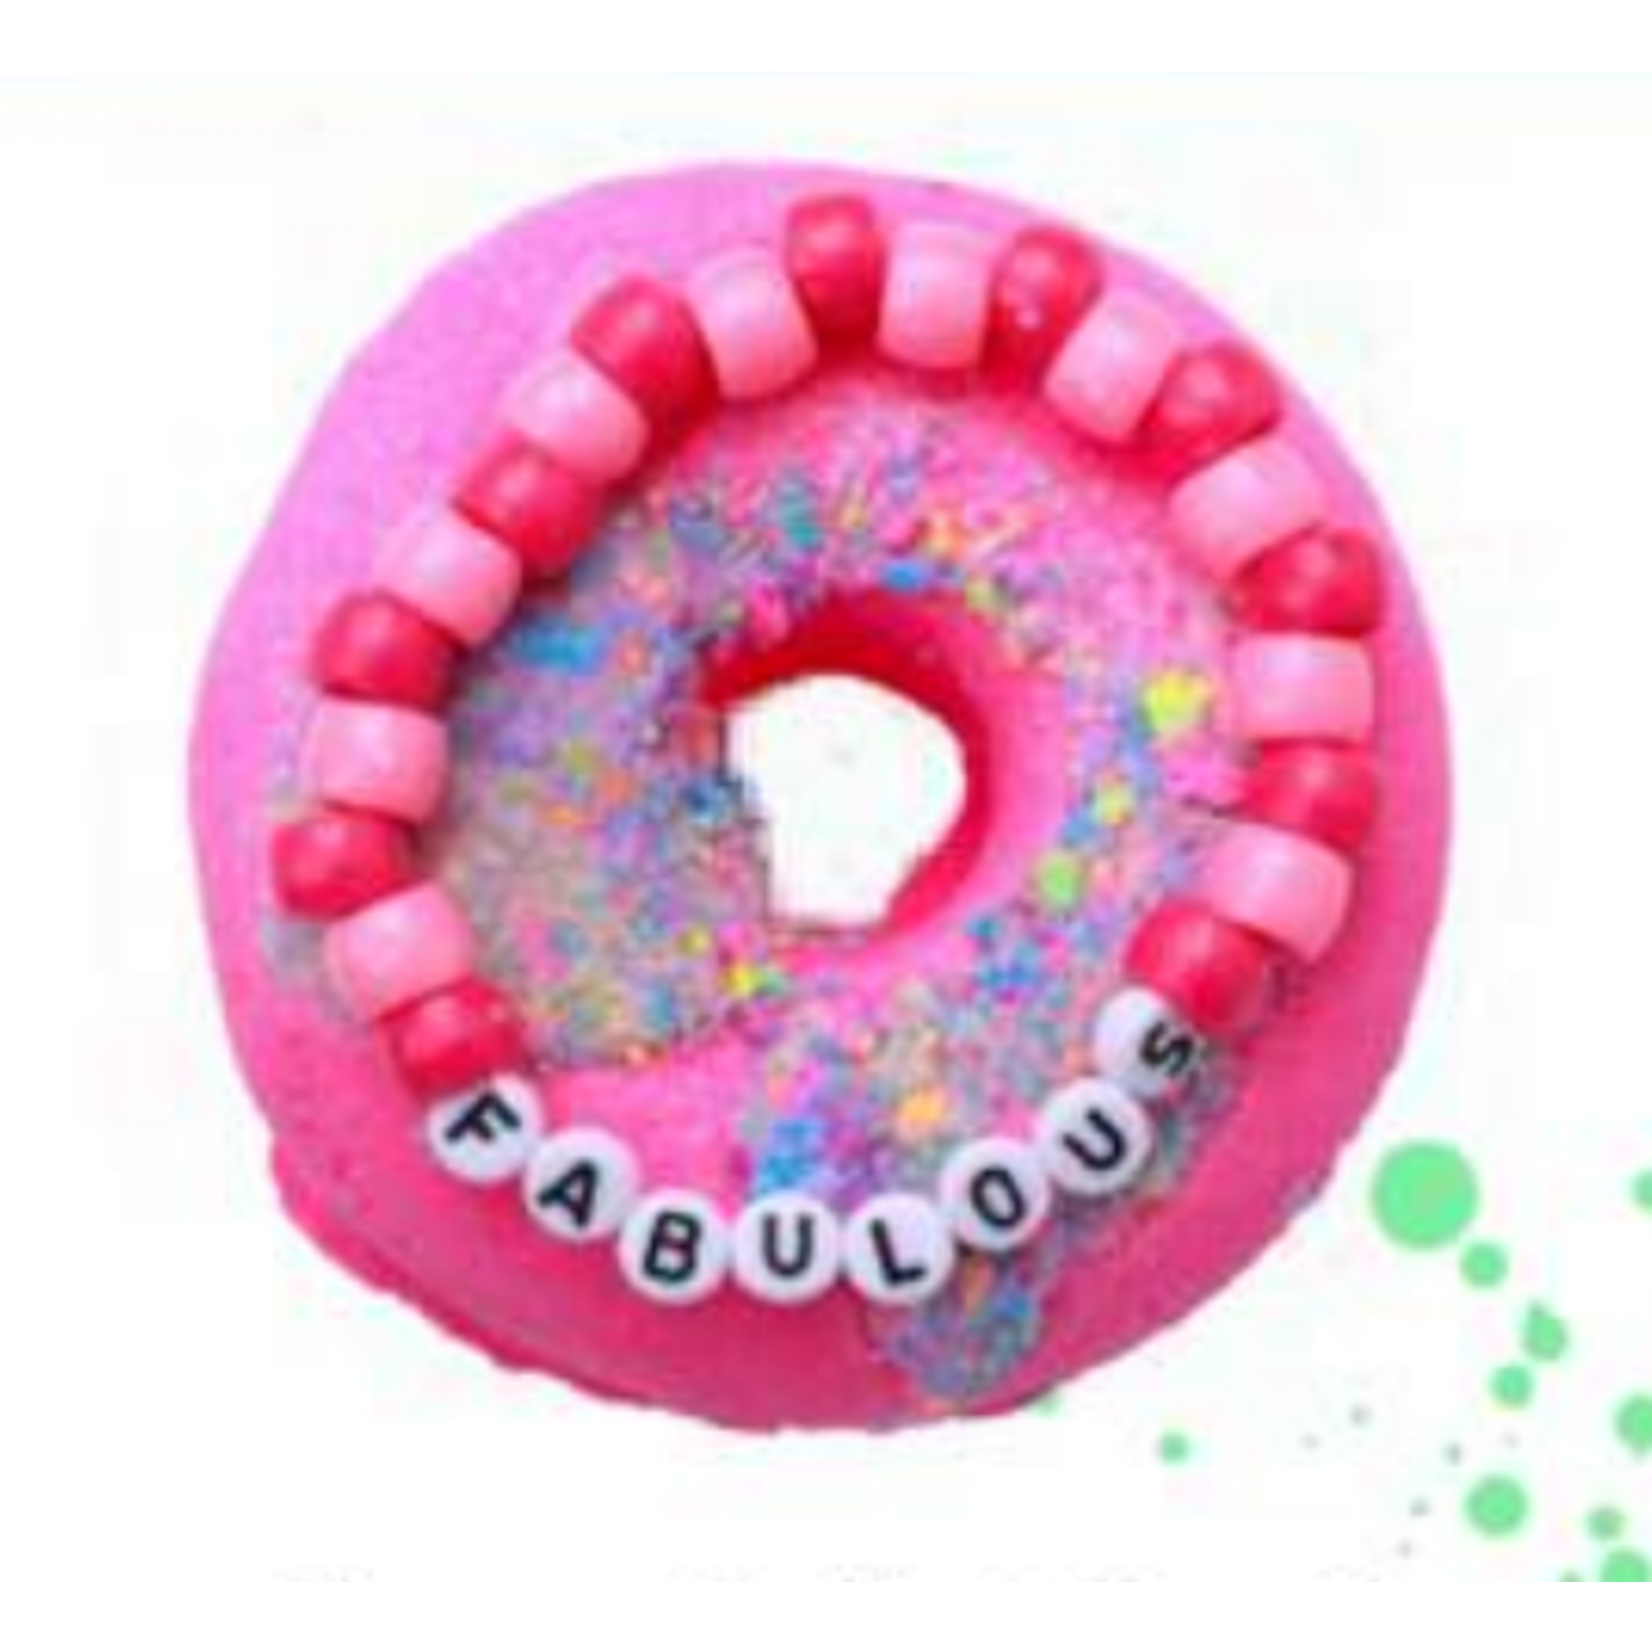 garb2art cosmetics garb2art Donut Bath Bomb with Bracelet Pink